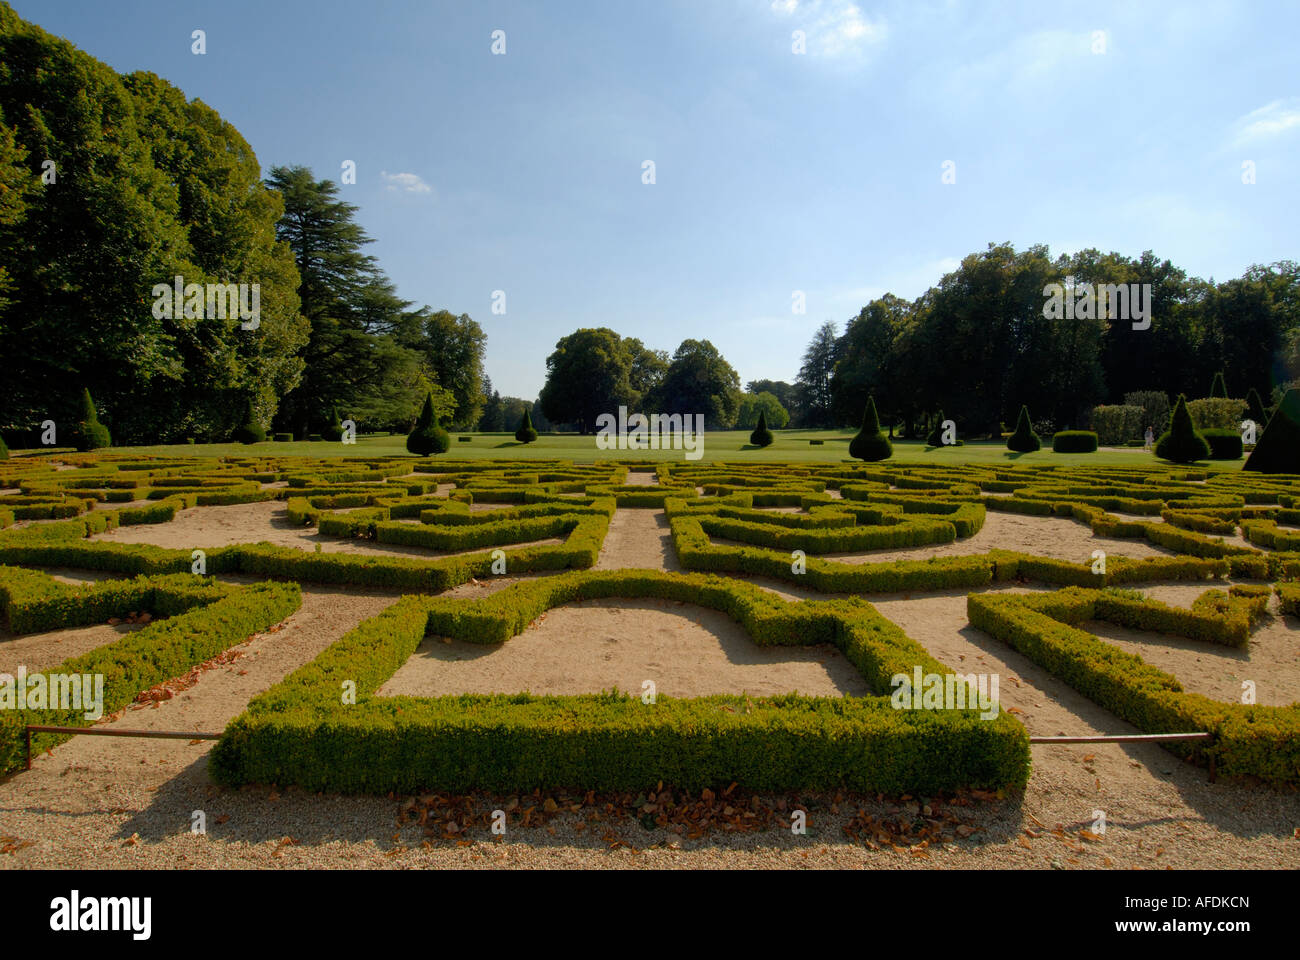 Formal gardens at Azay-le-Ferron, Indre, France. Stock Photo